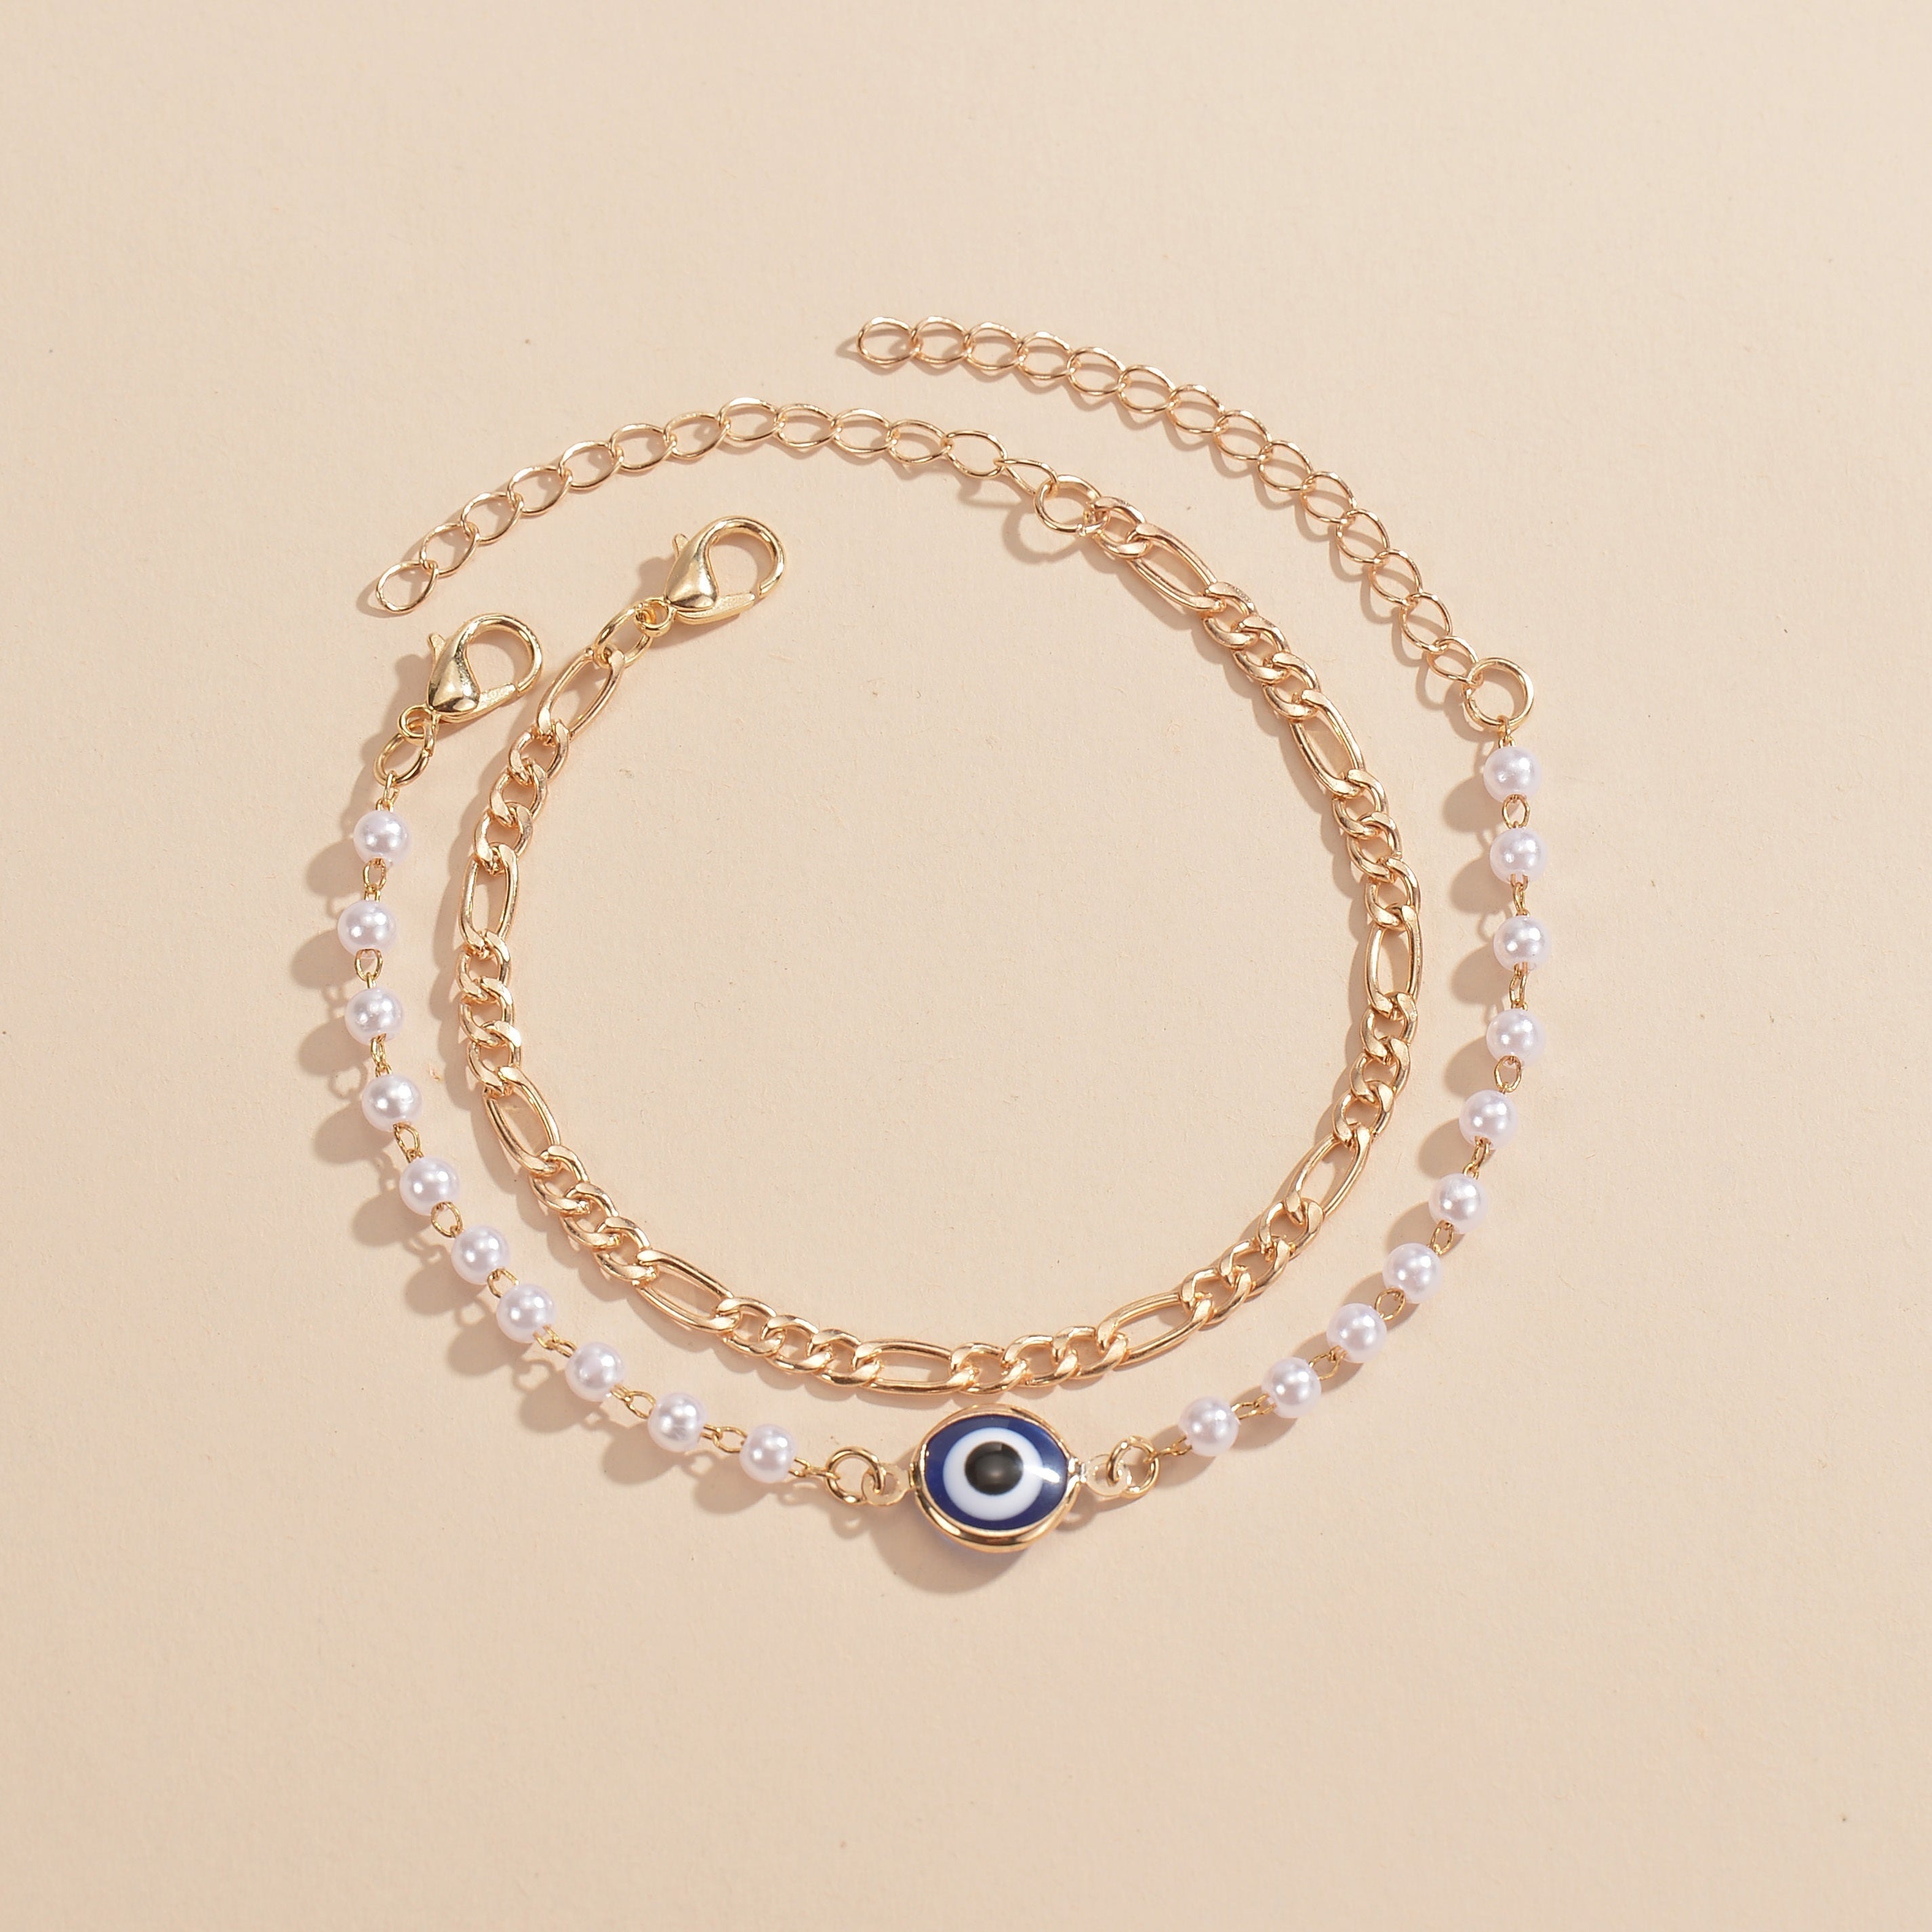 2pcs Devil's Eye Alloy Double Layer Faux Pearl Bracelet For Women Girls Gift